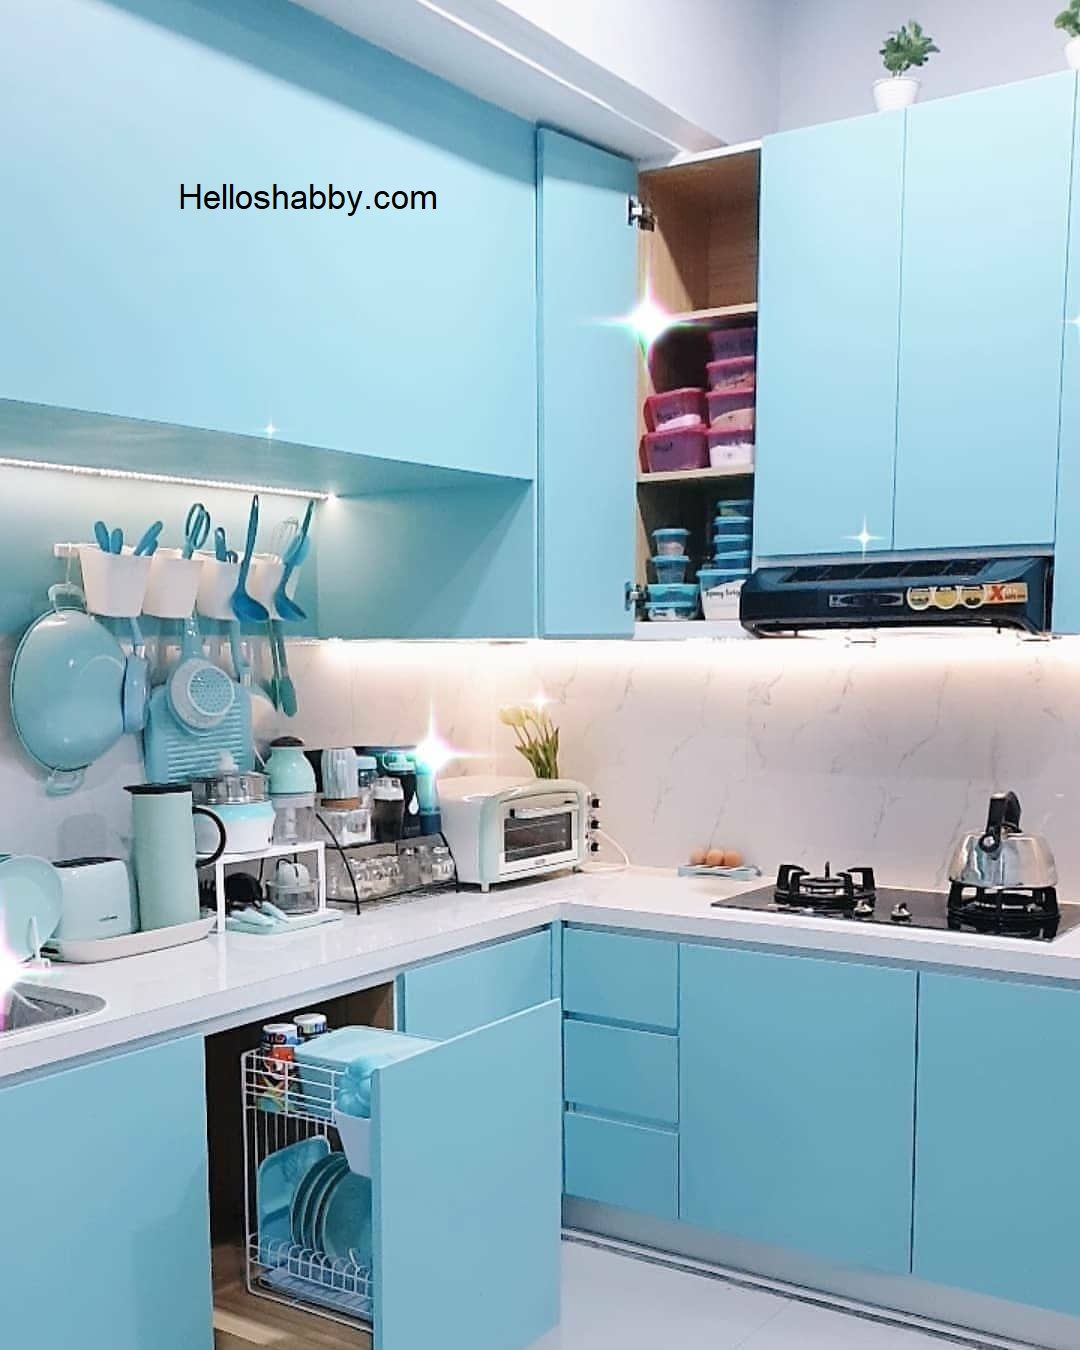 6 Gambar Model Kitchen Set Minimalis Warna Biru Terbaru HelloShabbycom Interior And Exterior Solutions